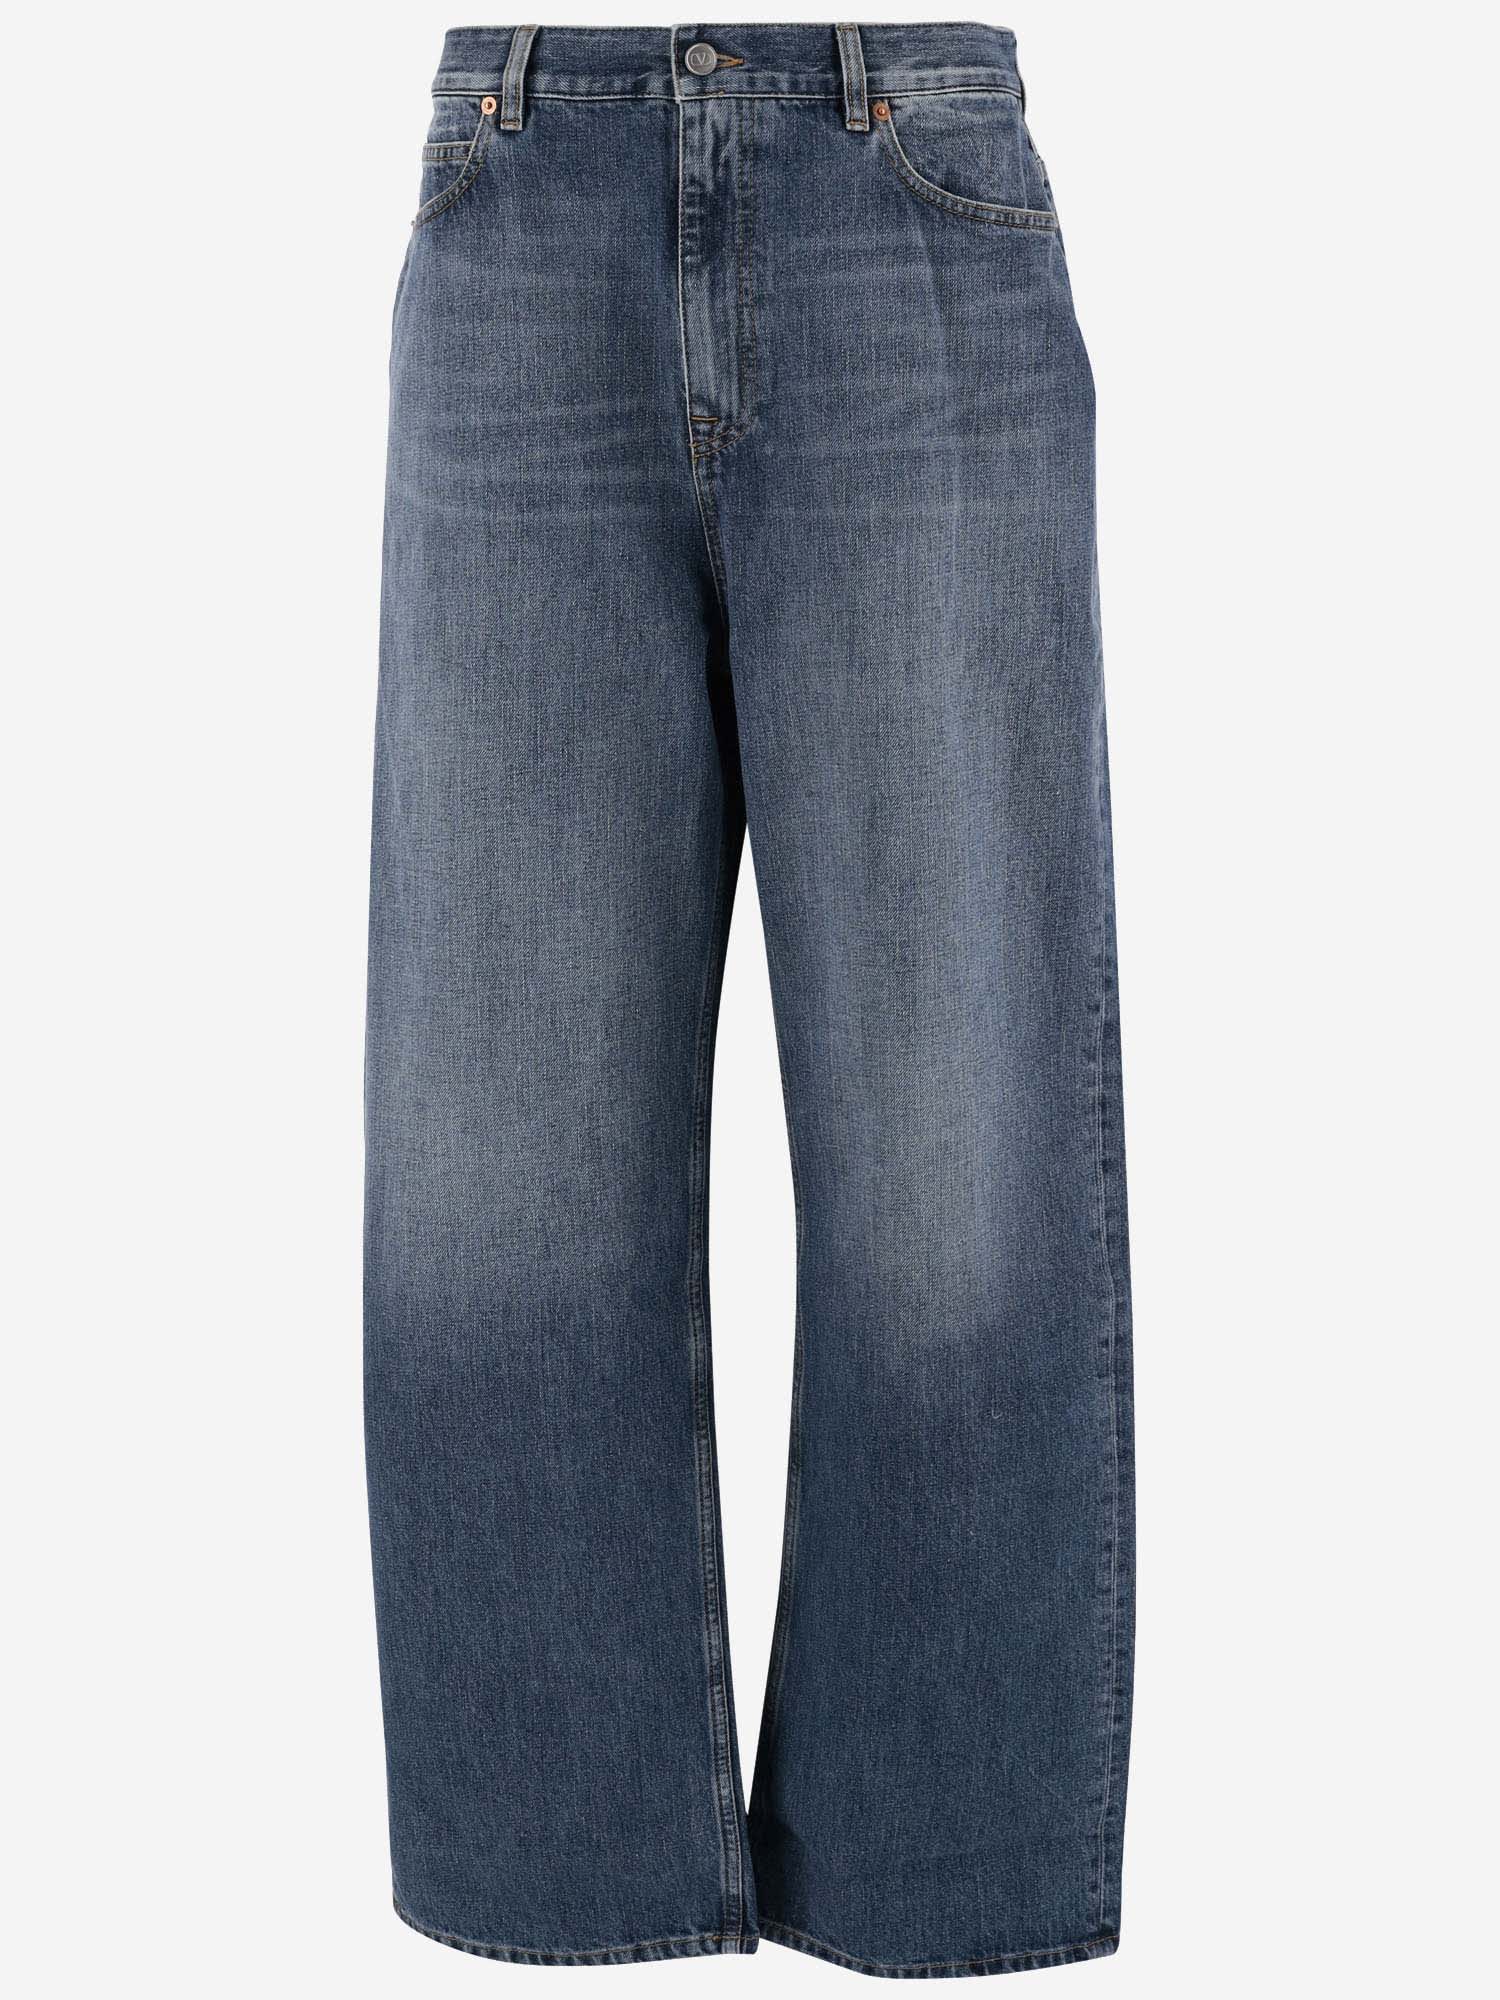 Valentino Cotton Denim Jeans